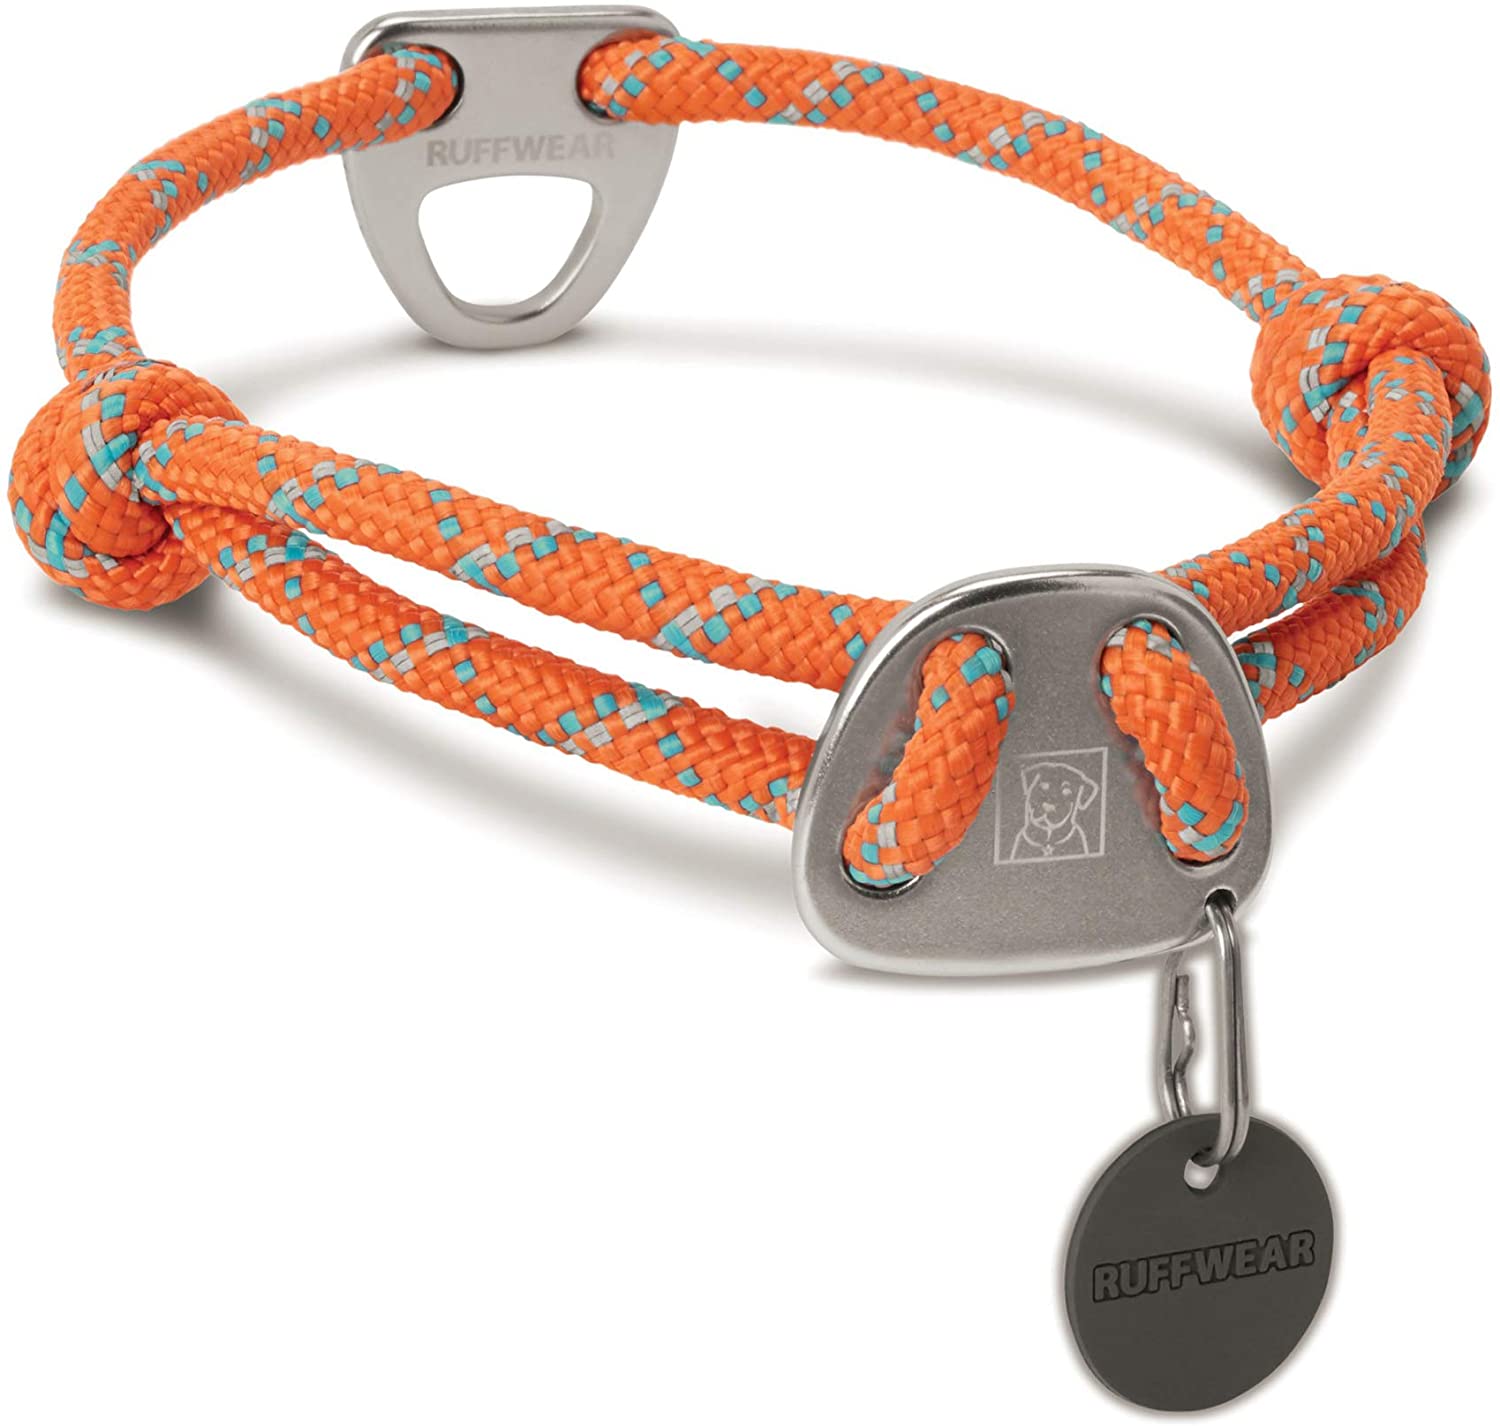  RUFFWEAR Collar de Cuerda para Perros, tamaño Mediano, Naranja Calabaza, Nudo-a-Collar 